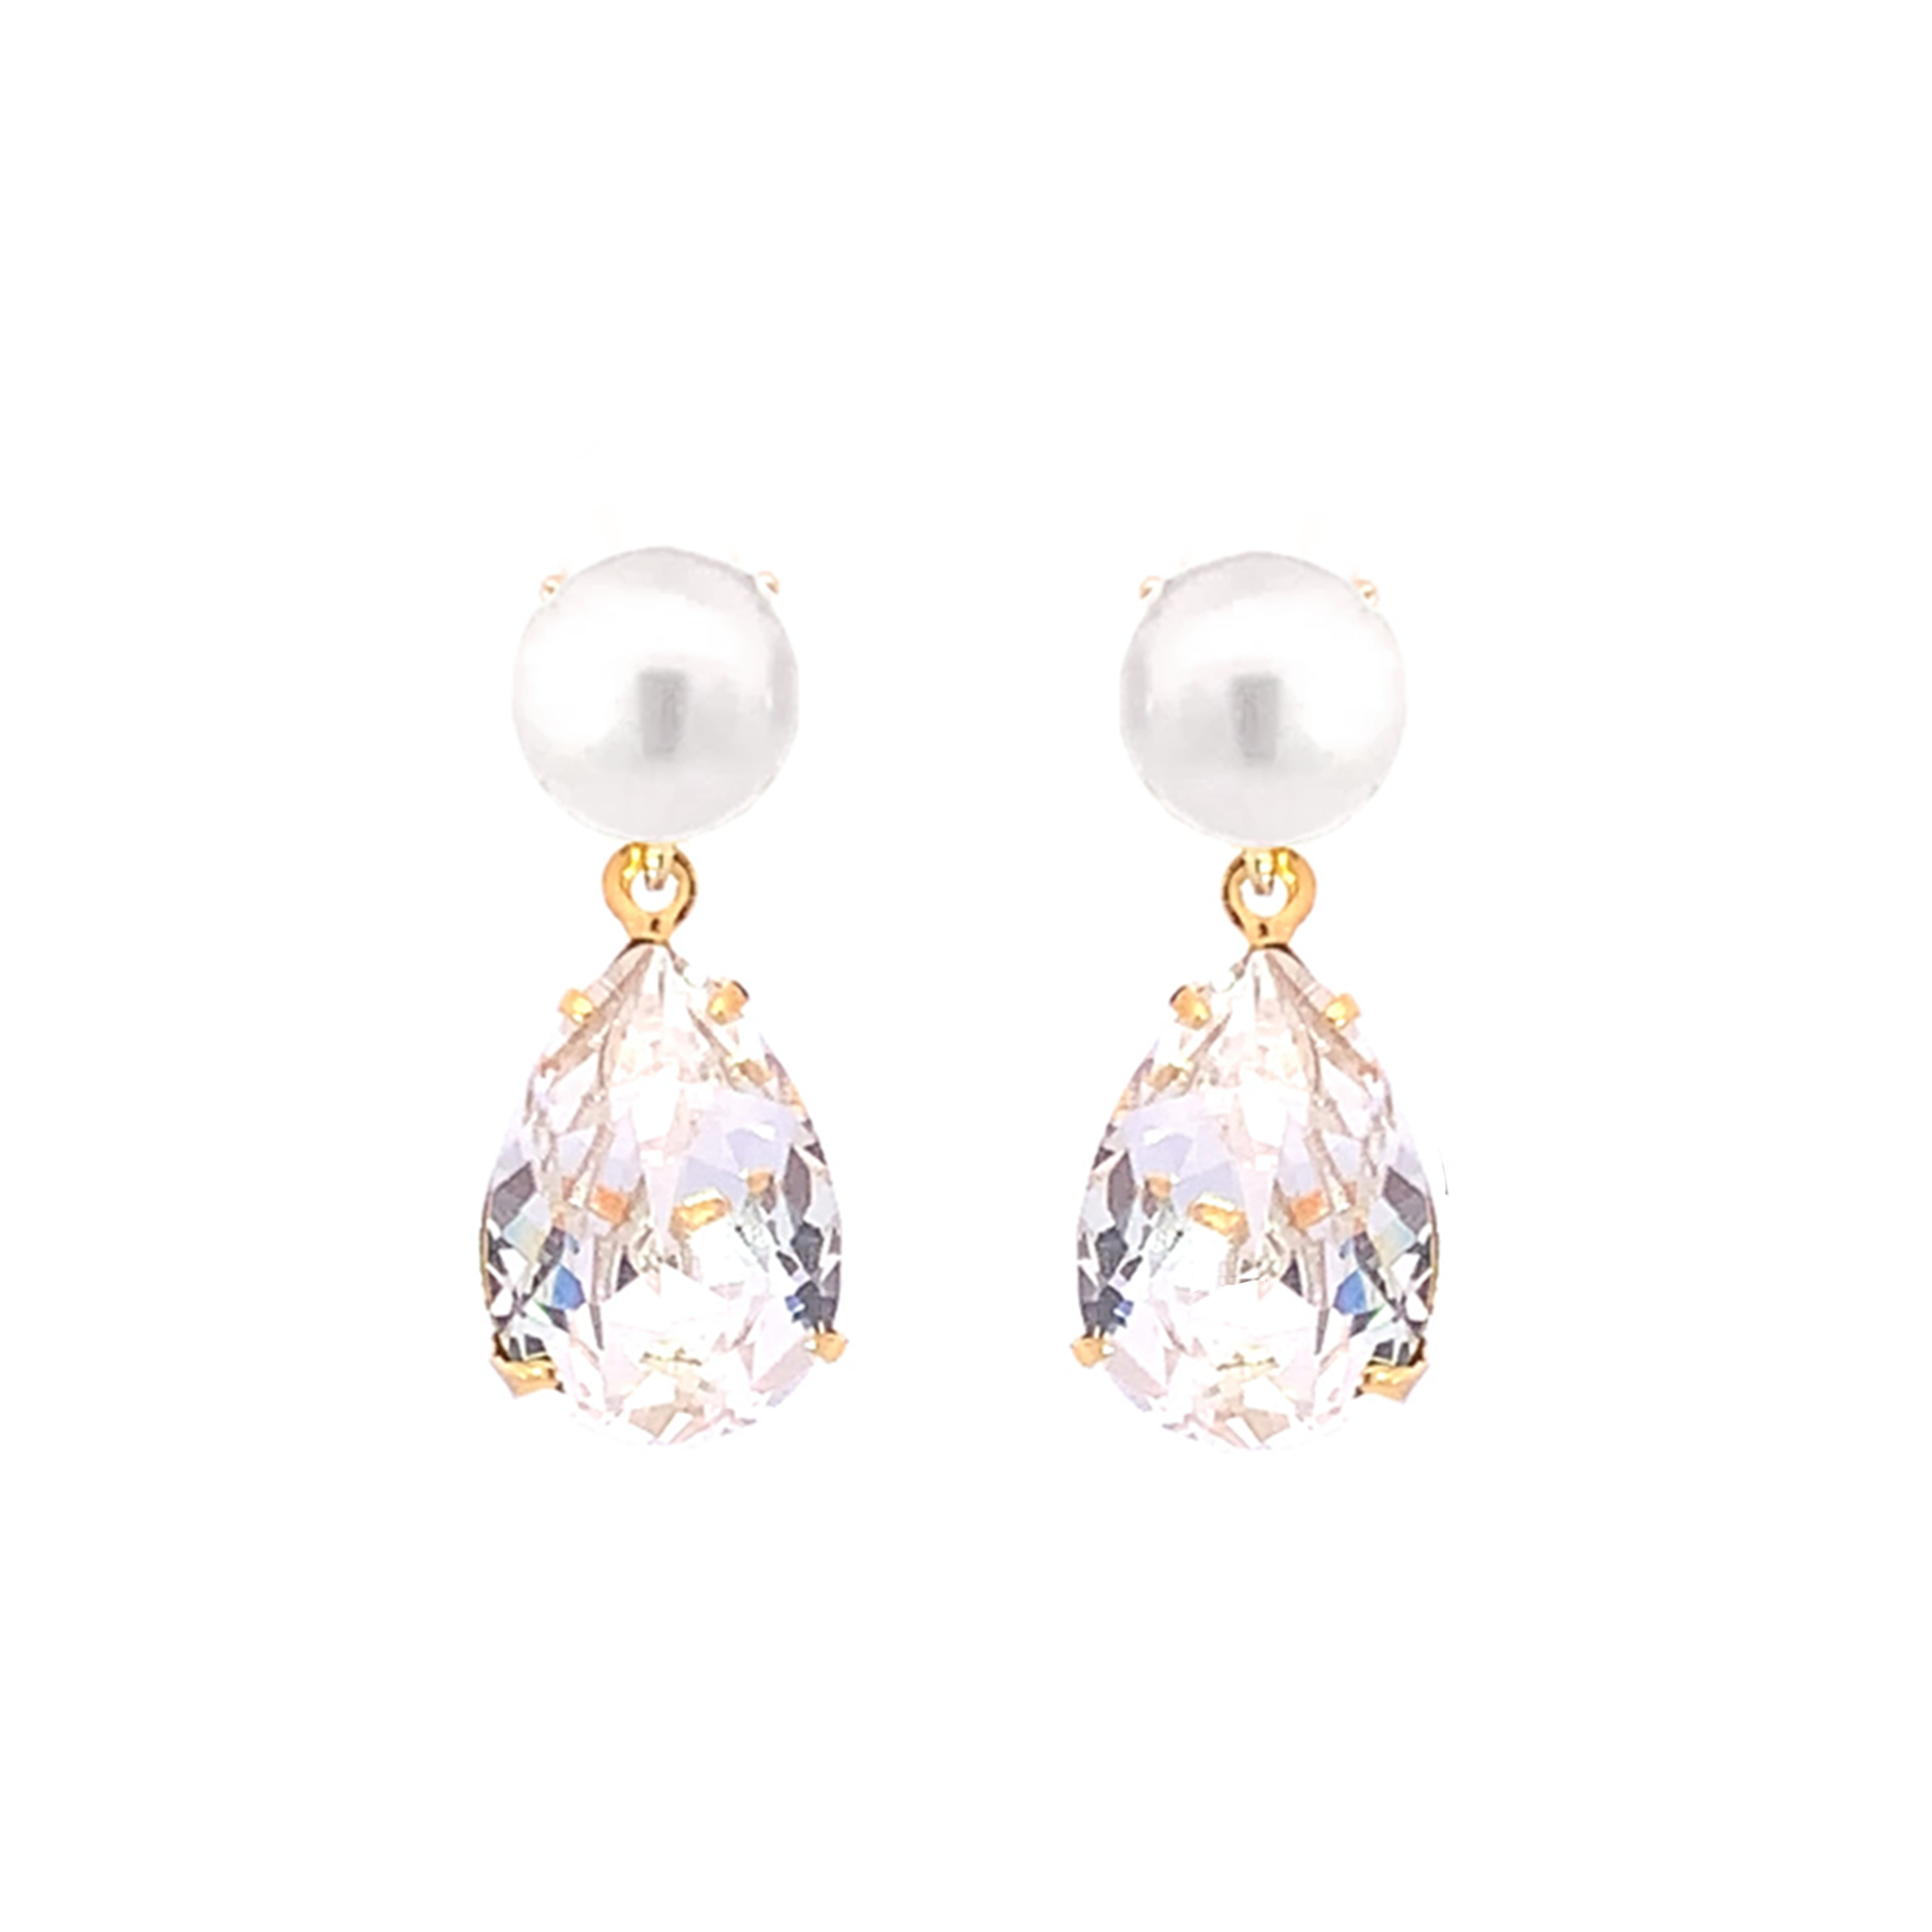 April birthstone pearl earrings gold